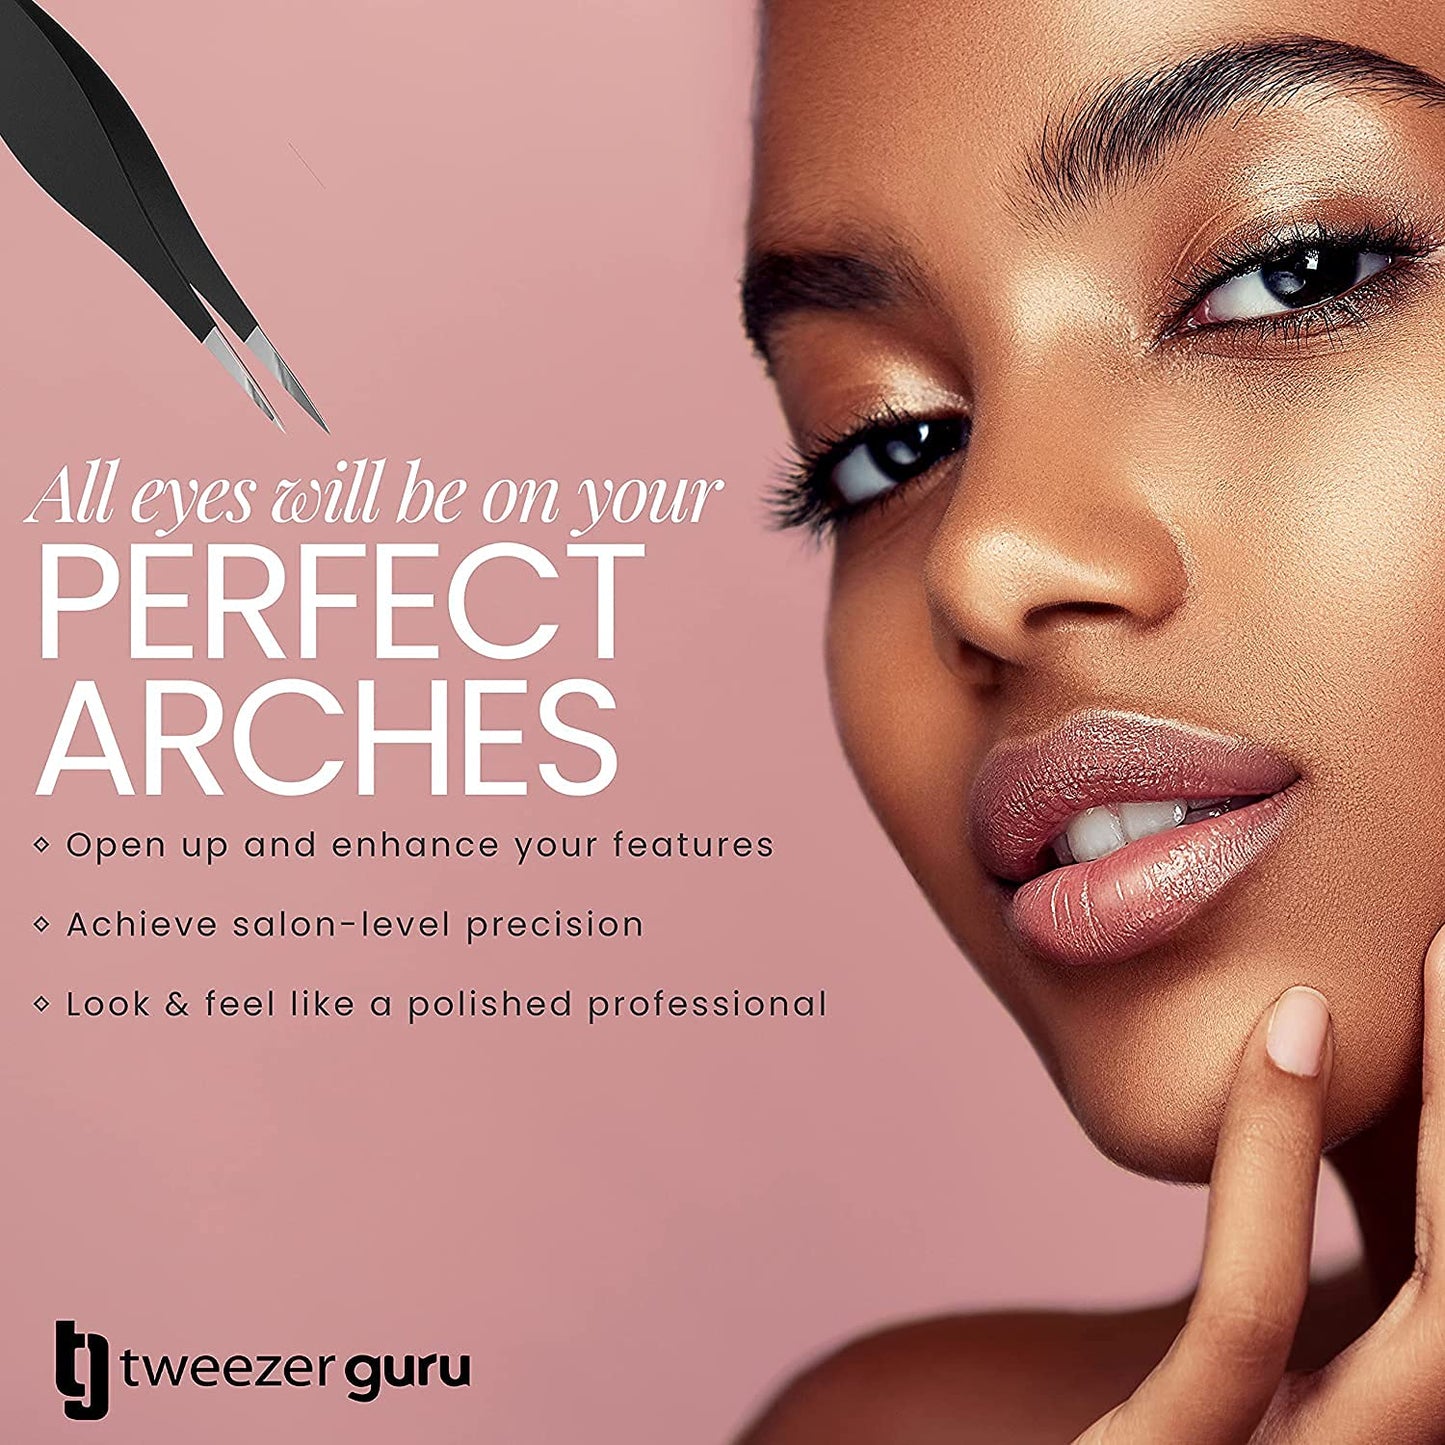 Tweezer Guru Pointed Tweezers - Sharp Precision Needle Nose Tip, Best Tweezers for Eyebrows and Ingrown Hair, Surgical Pointed for Blackheads & Splinters (Classic Pink & Black)